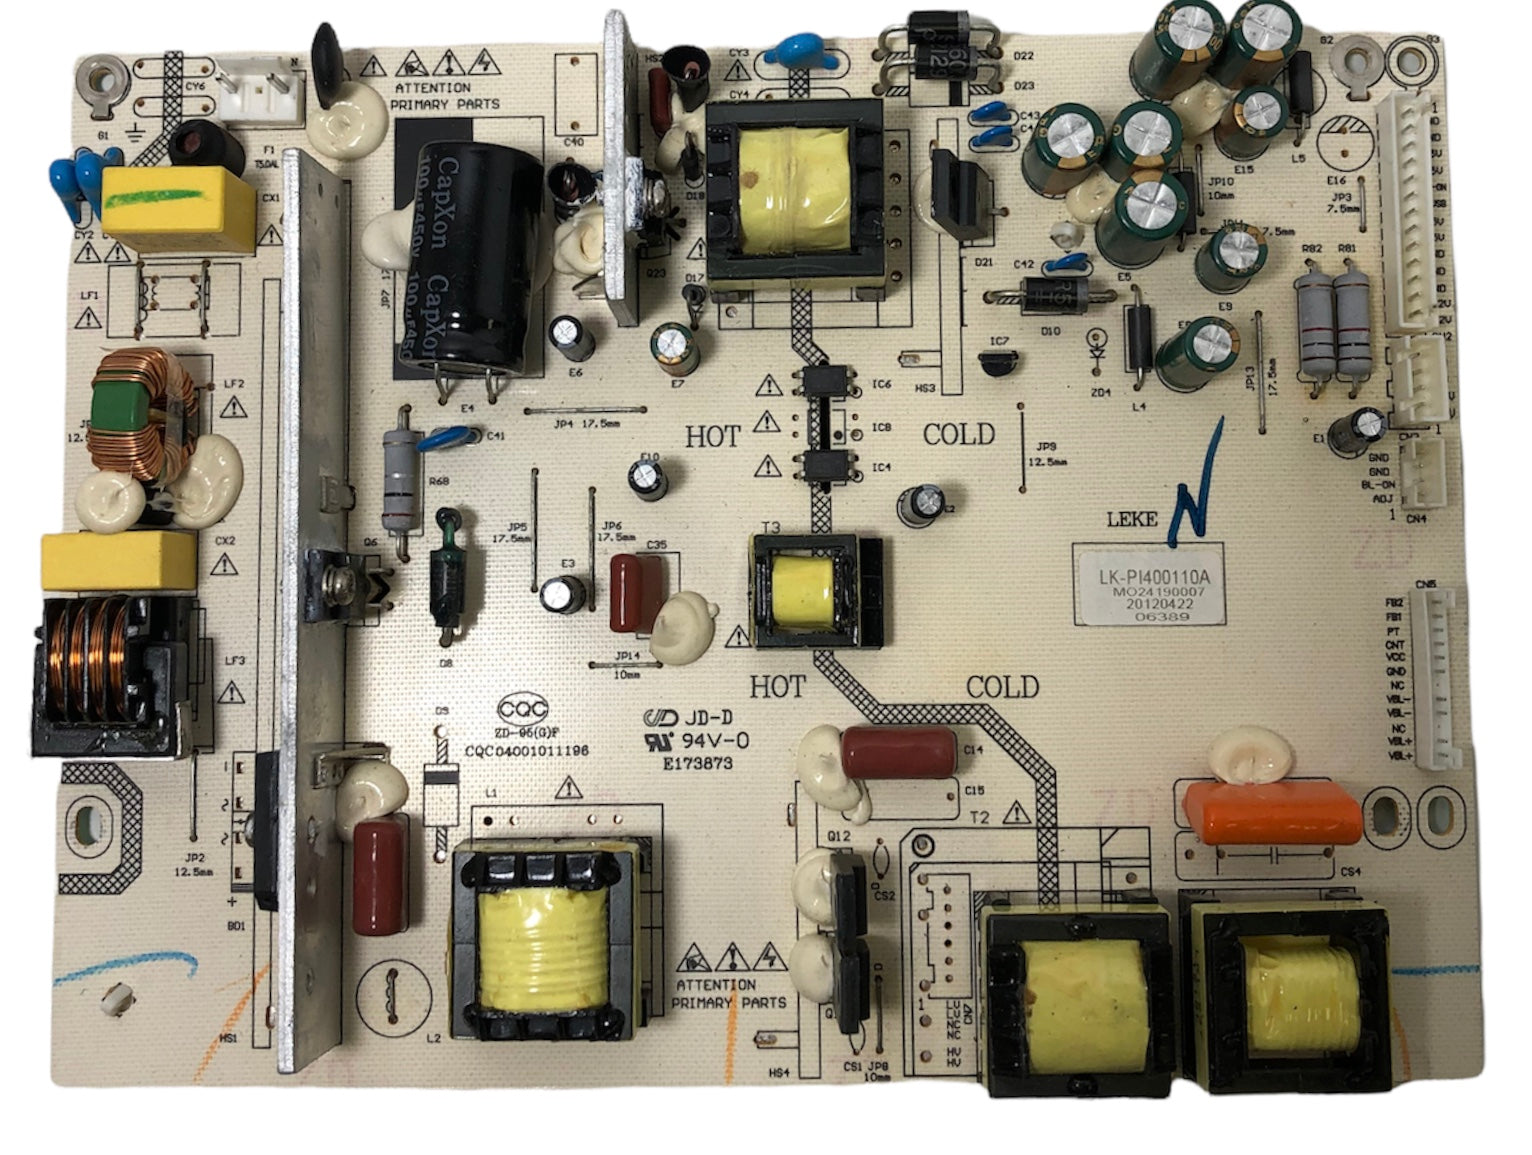 Haier/Proscan/Westinghouse TV-5210-760 (LK-PI400110A) Power Supply Unit